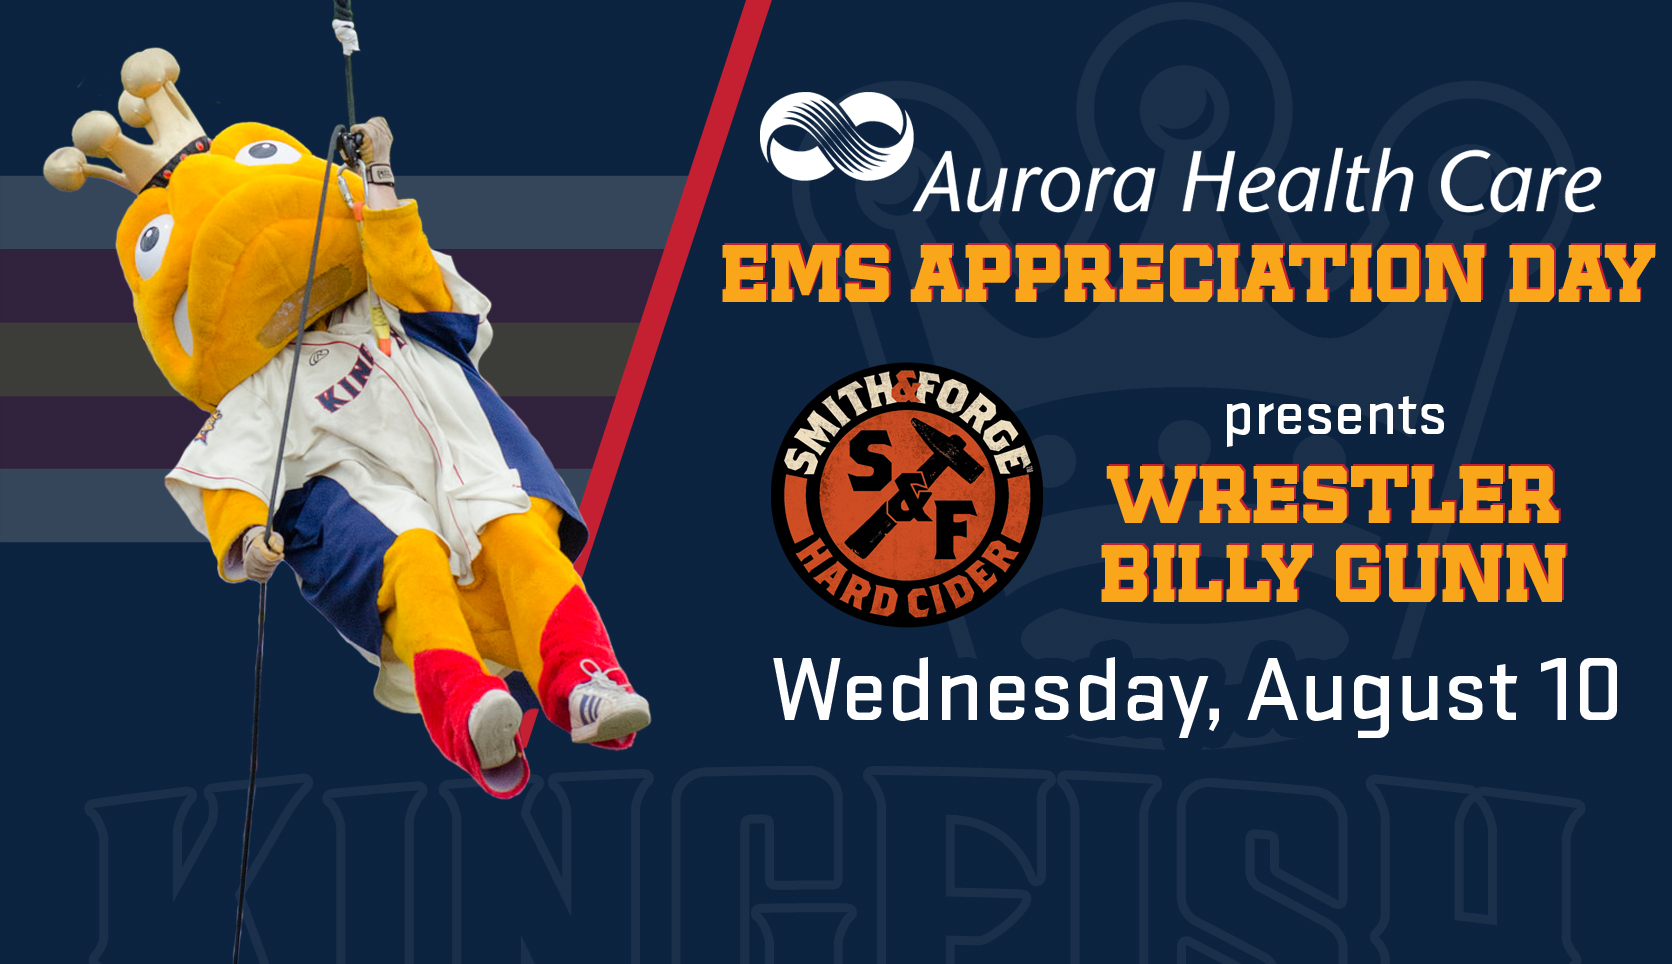 Aurora Health Care EMS Appreciation Day, Smith & Forge Presents Wrestler Billy Gunn ...1672 x 964